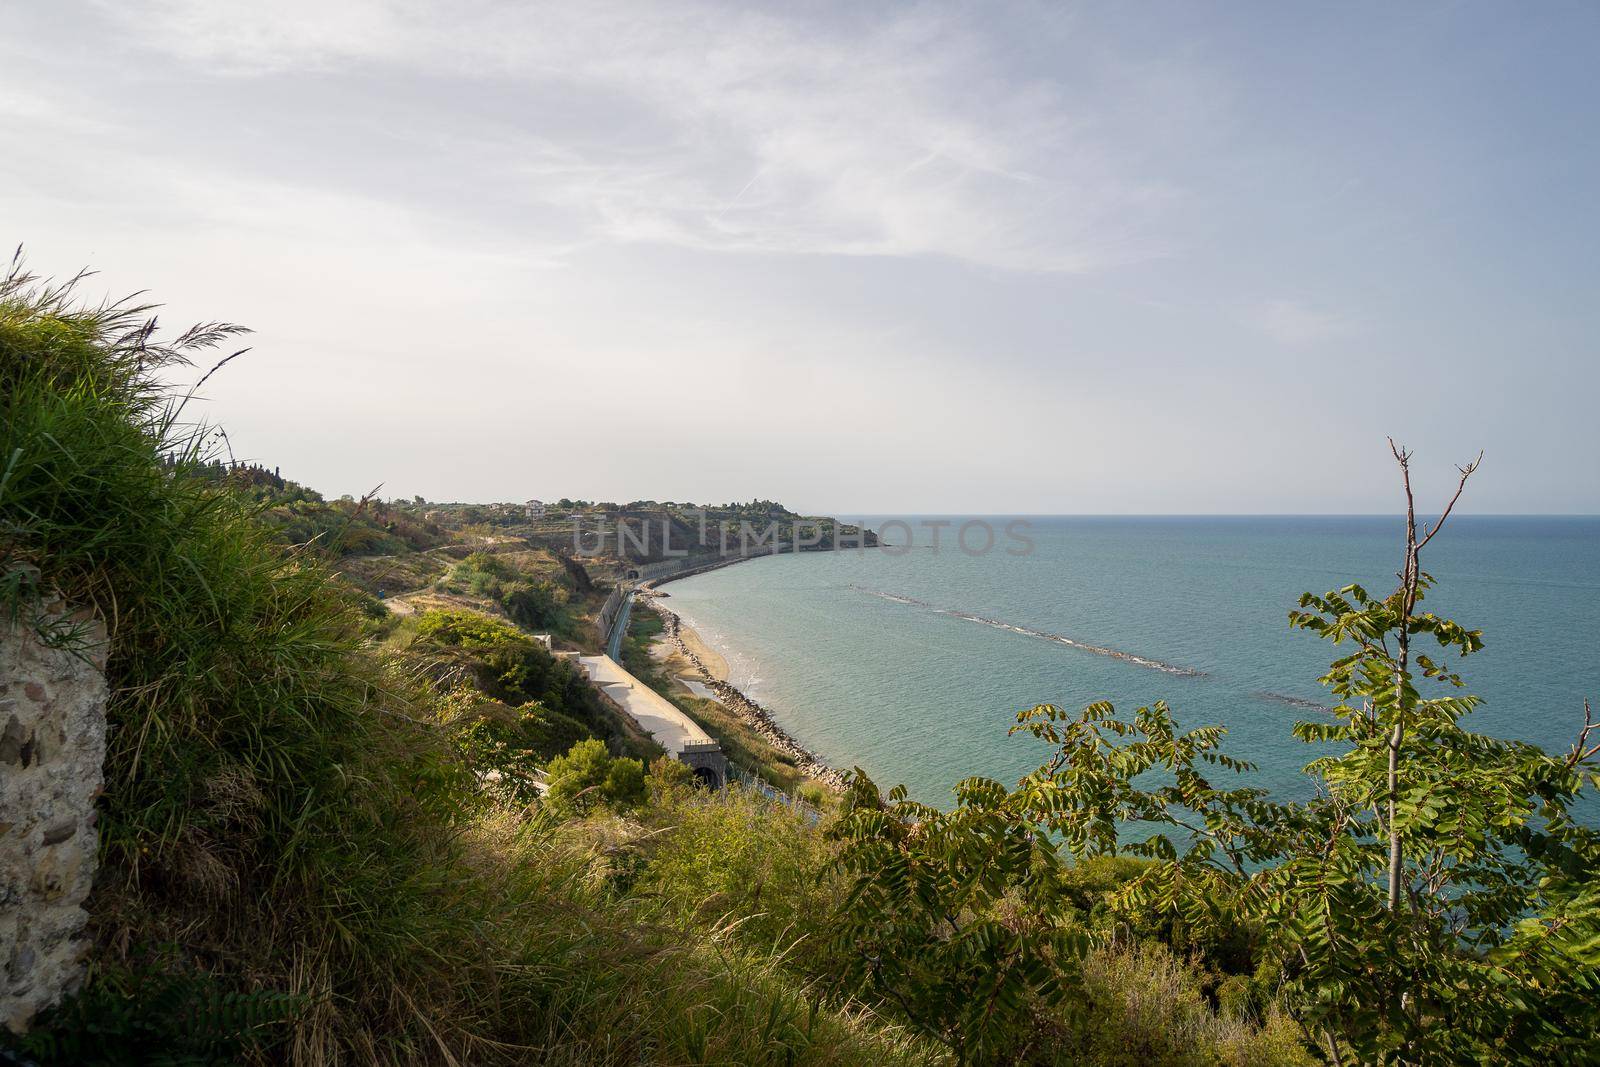 Italy sea coast of adriatic sea vacation by javax